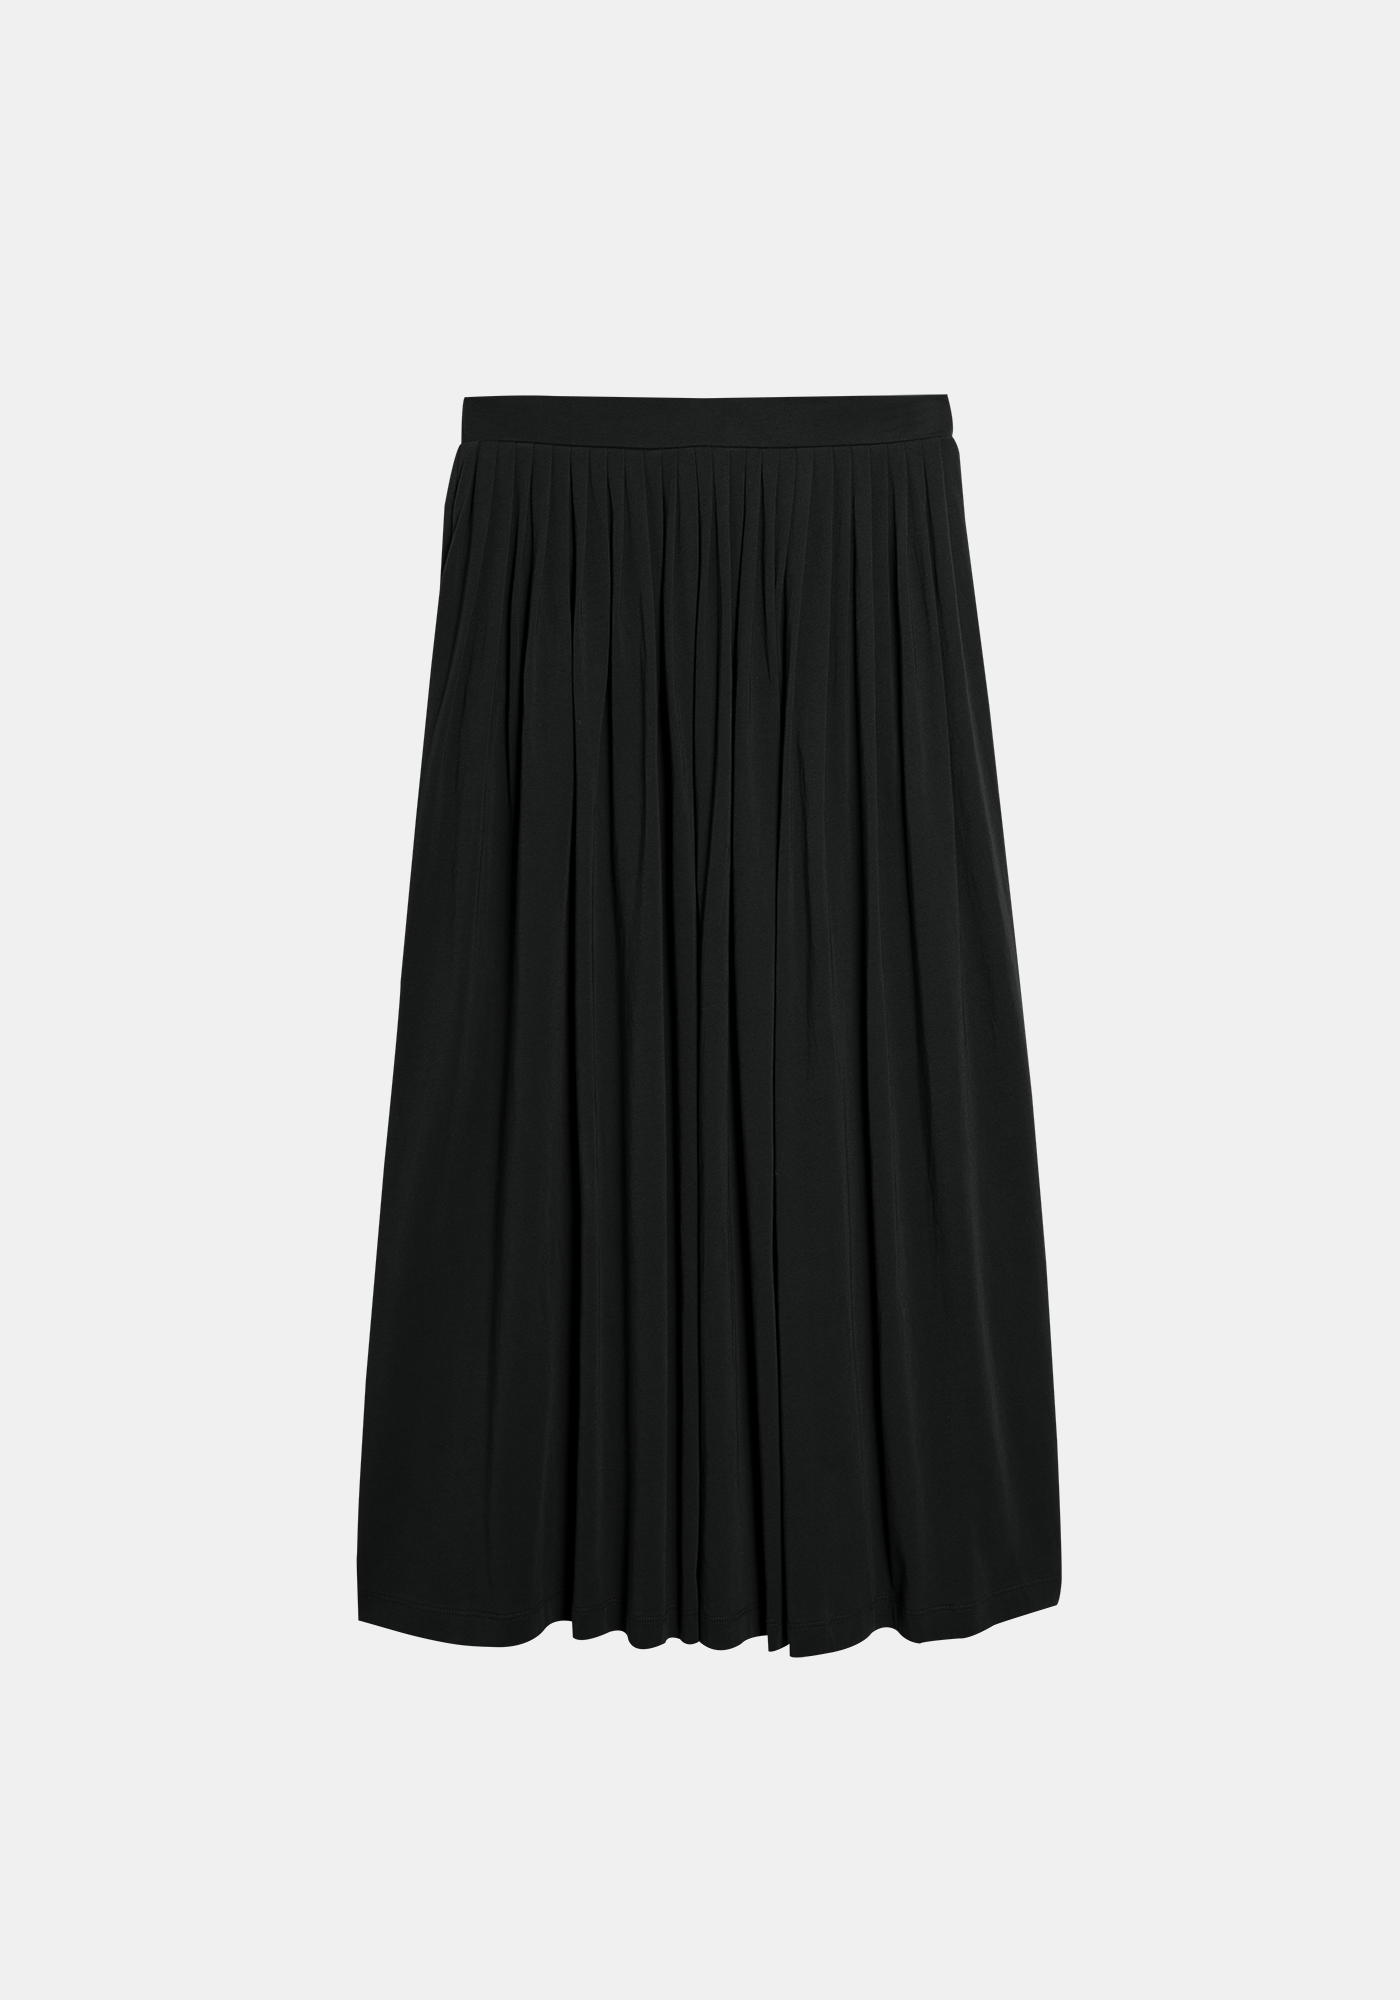 Lionel Pima Cotton Skirt